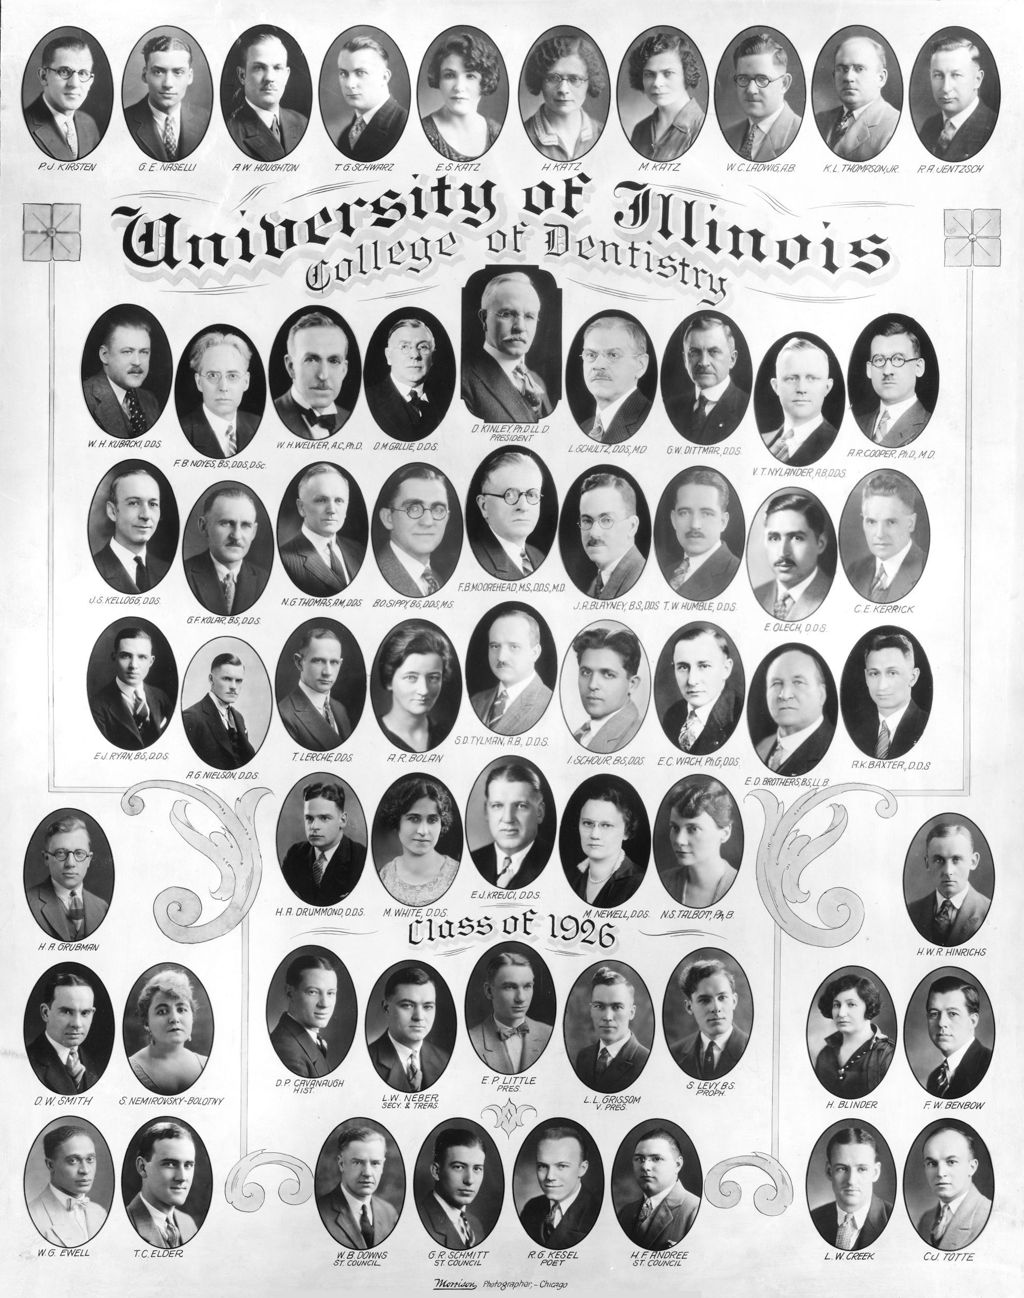 Miniature of 1926 graduating class, University of Illinois College of Dentistry